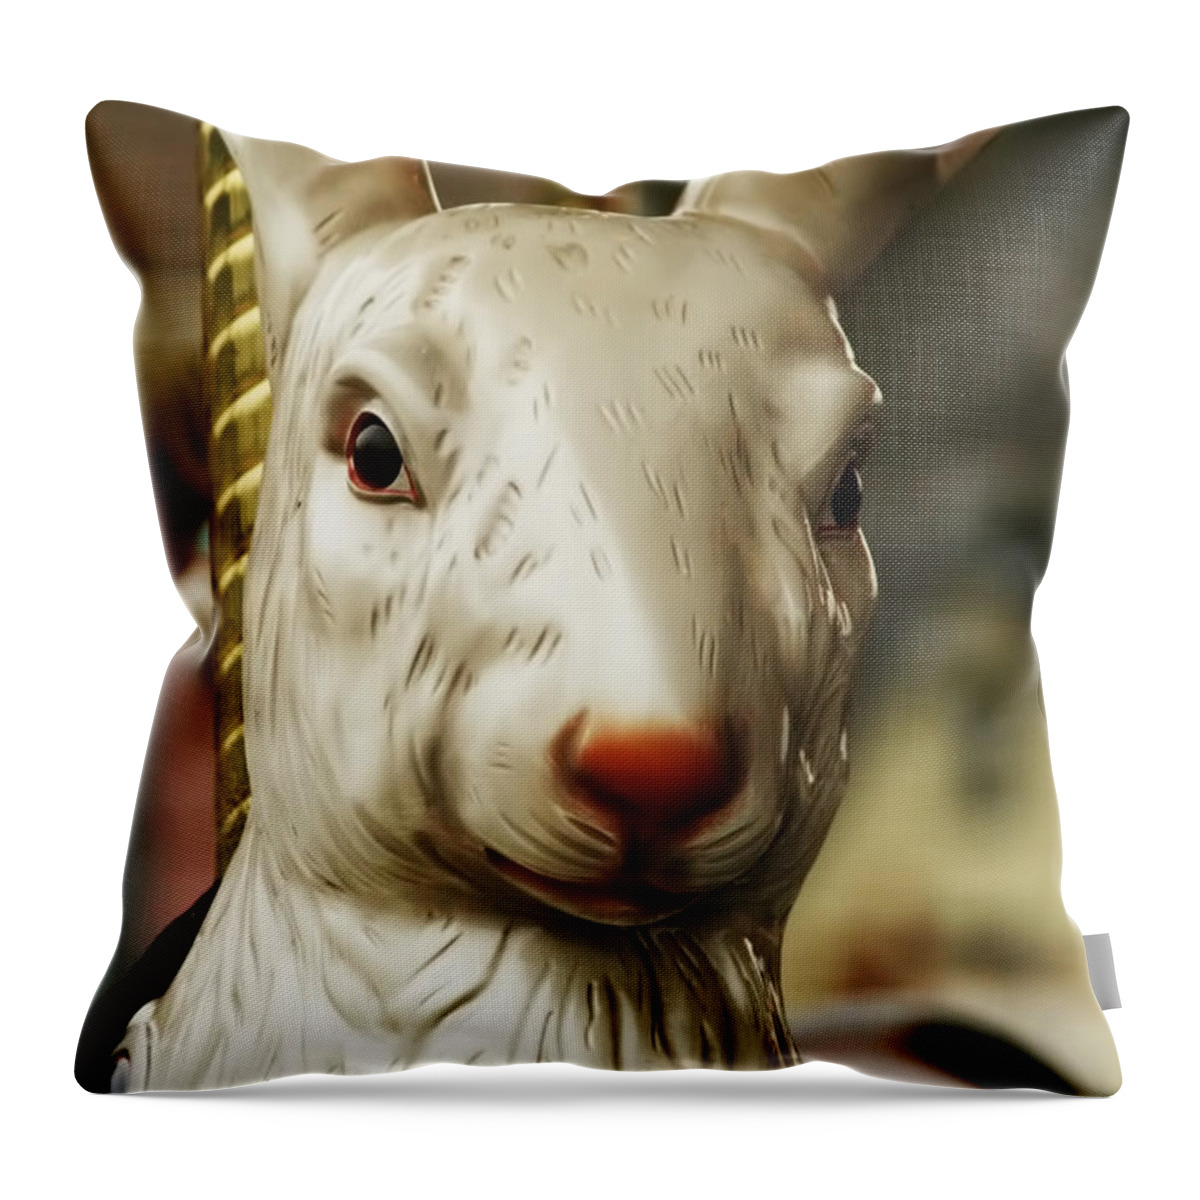 Carousel Throw Pillow featuring the photograph Carousel Rabbit by Kristia Adams